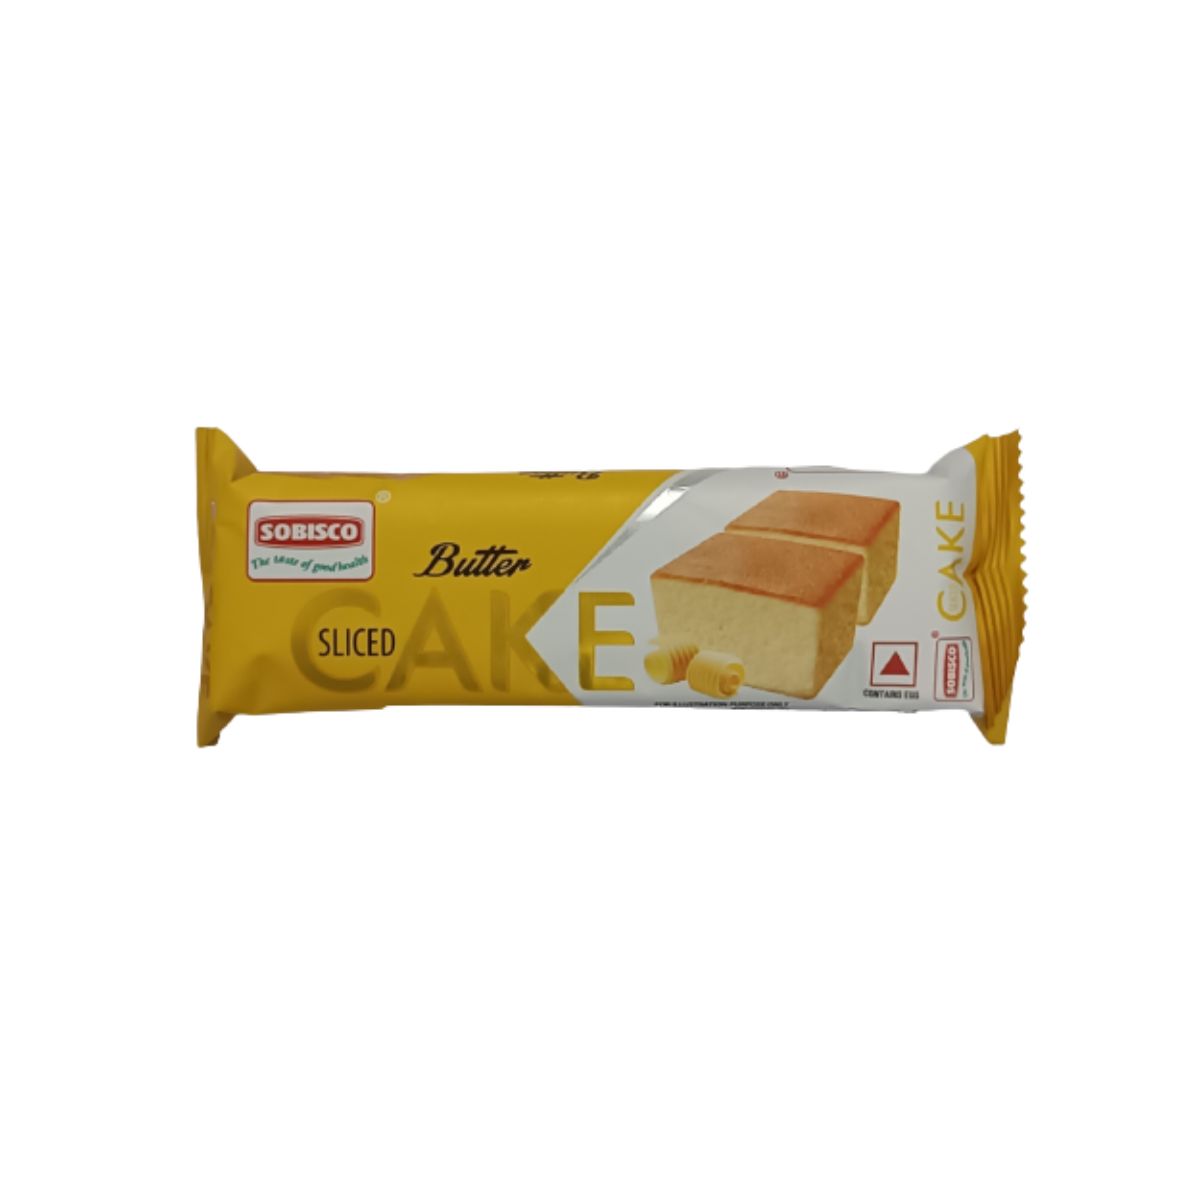 Sobisco Slice Cake - Butter - 35g